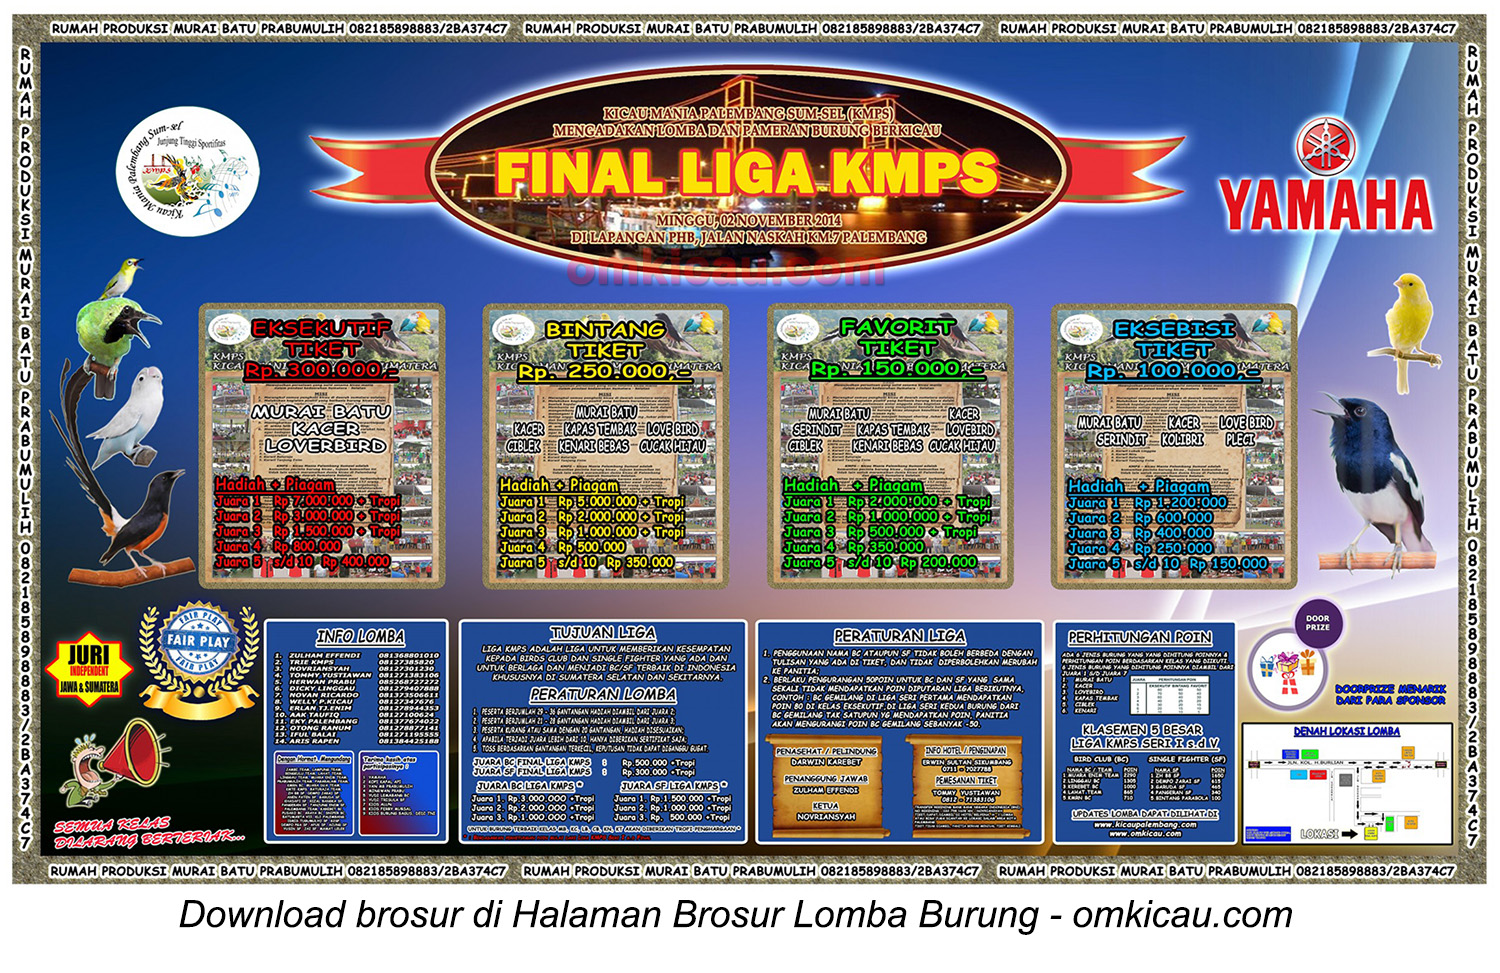 Brosur Lomba Burung Berkicau Final Liga KMPS, Palembang, 2 November 2014